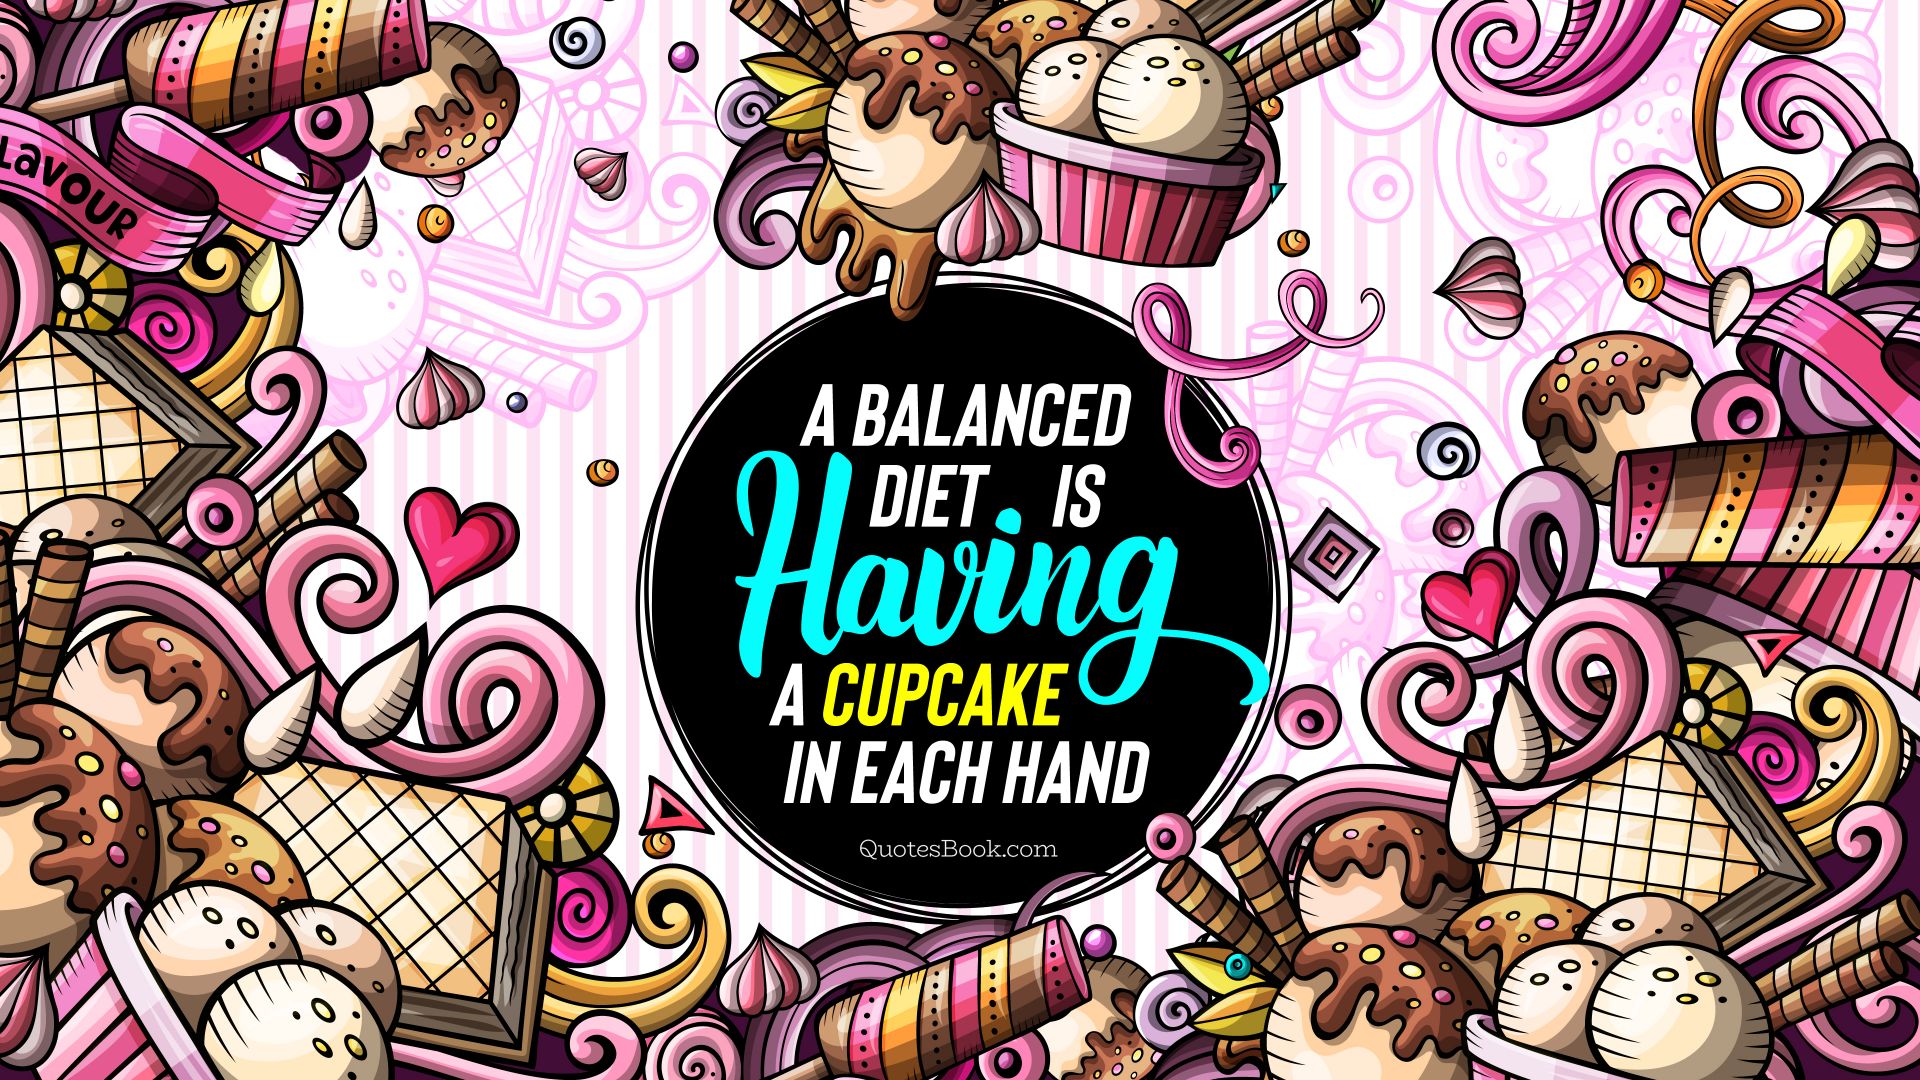 A balanced diet is having a cupcake in each hand